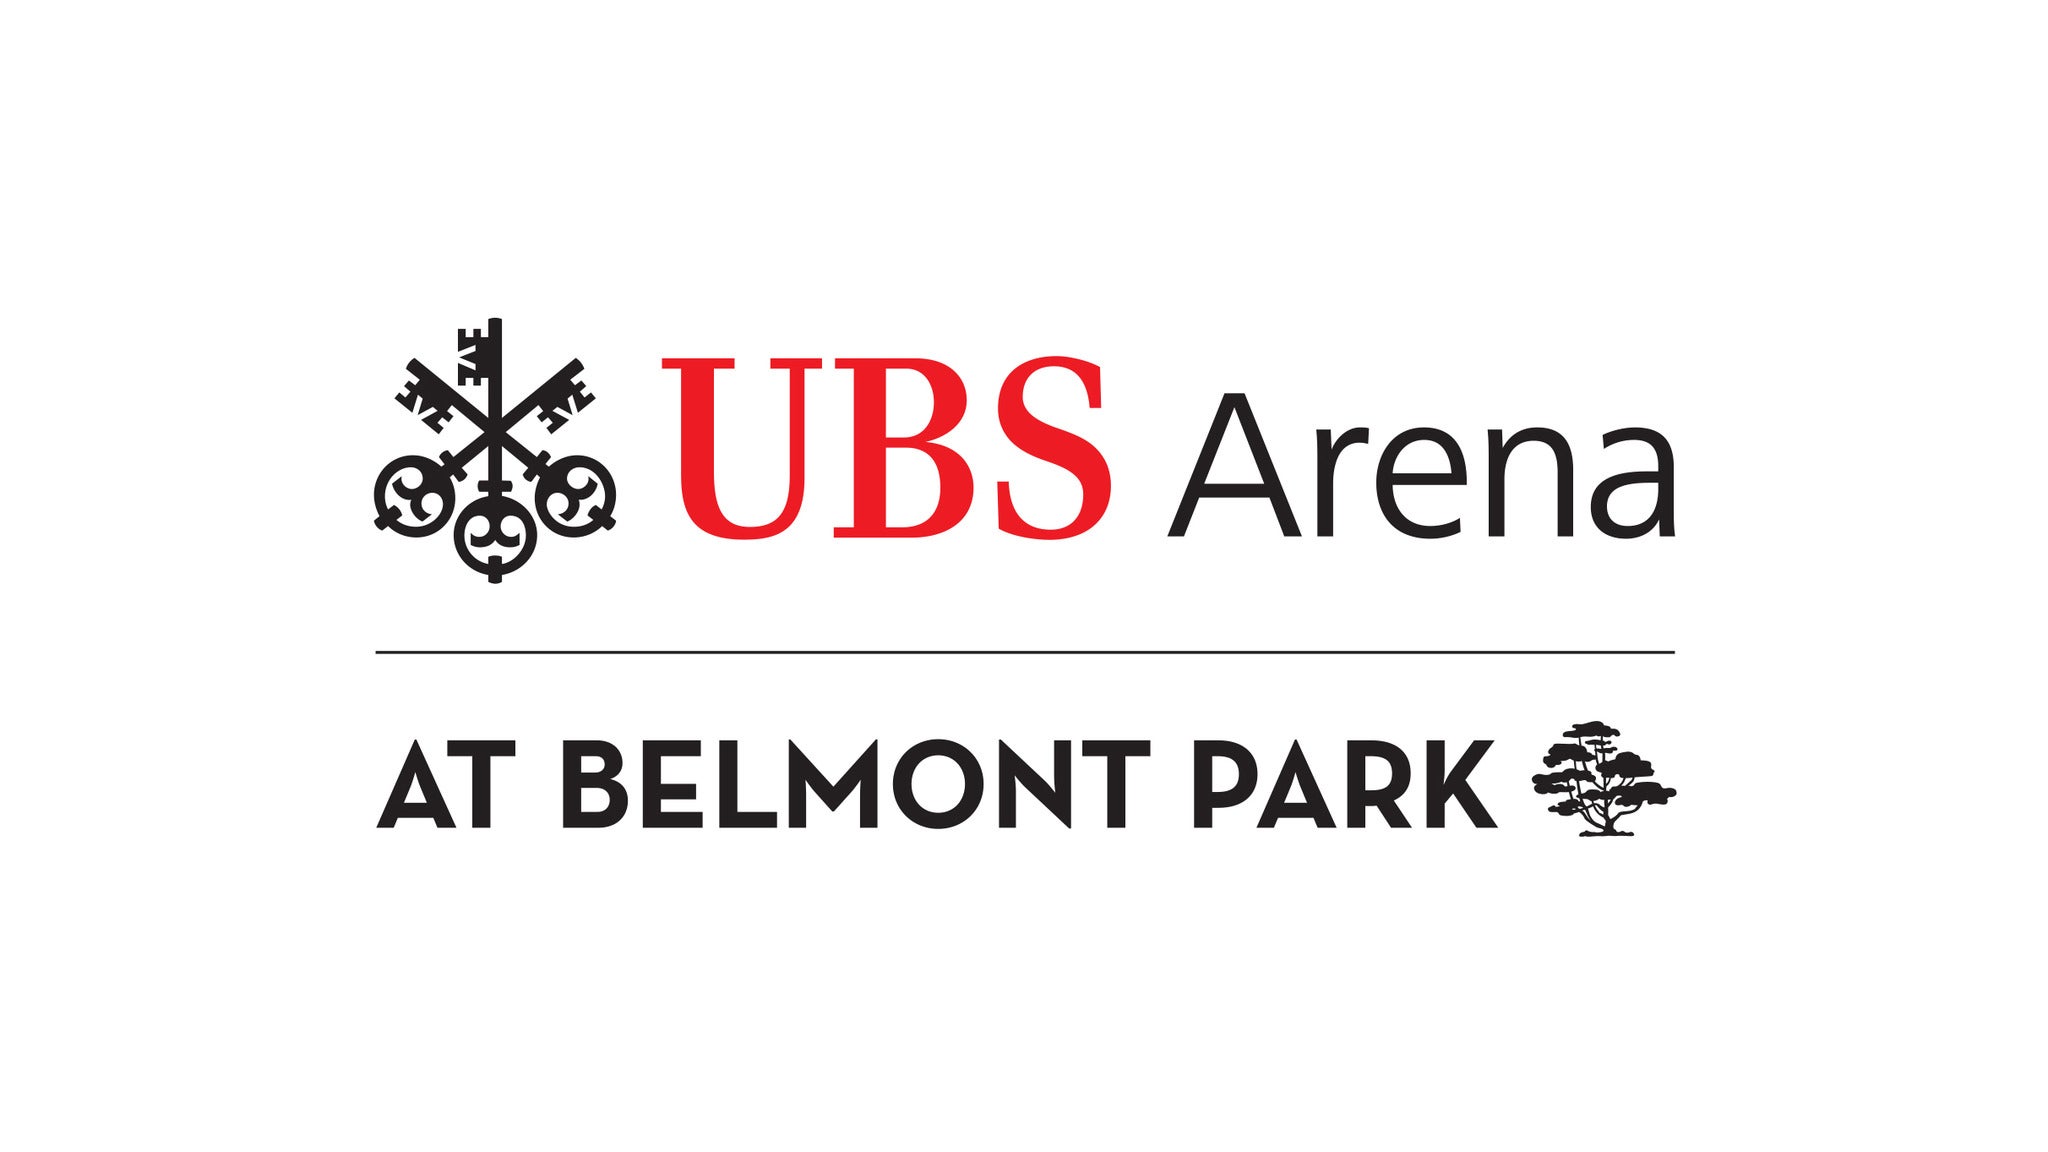 UBS Arena Parking: Jurassic World Live Tour in Belmont Park - Long Island promo photo for Internet presale offer code